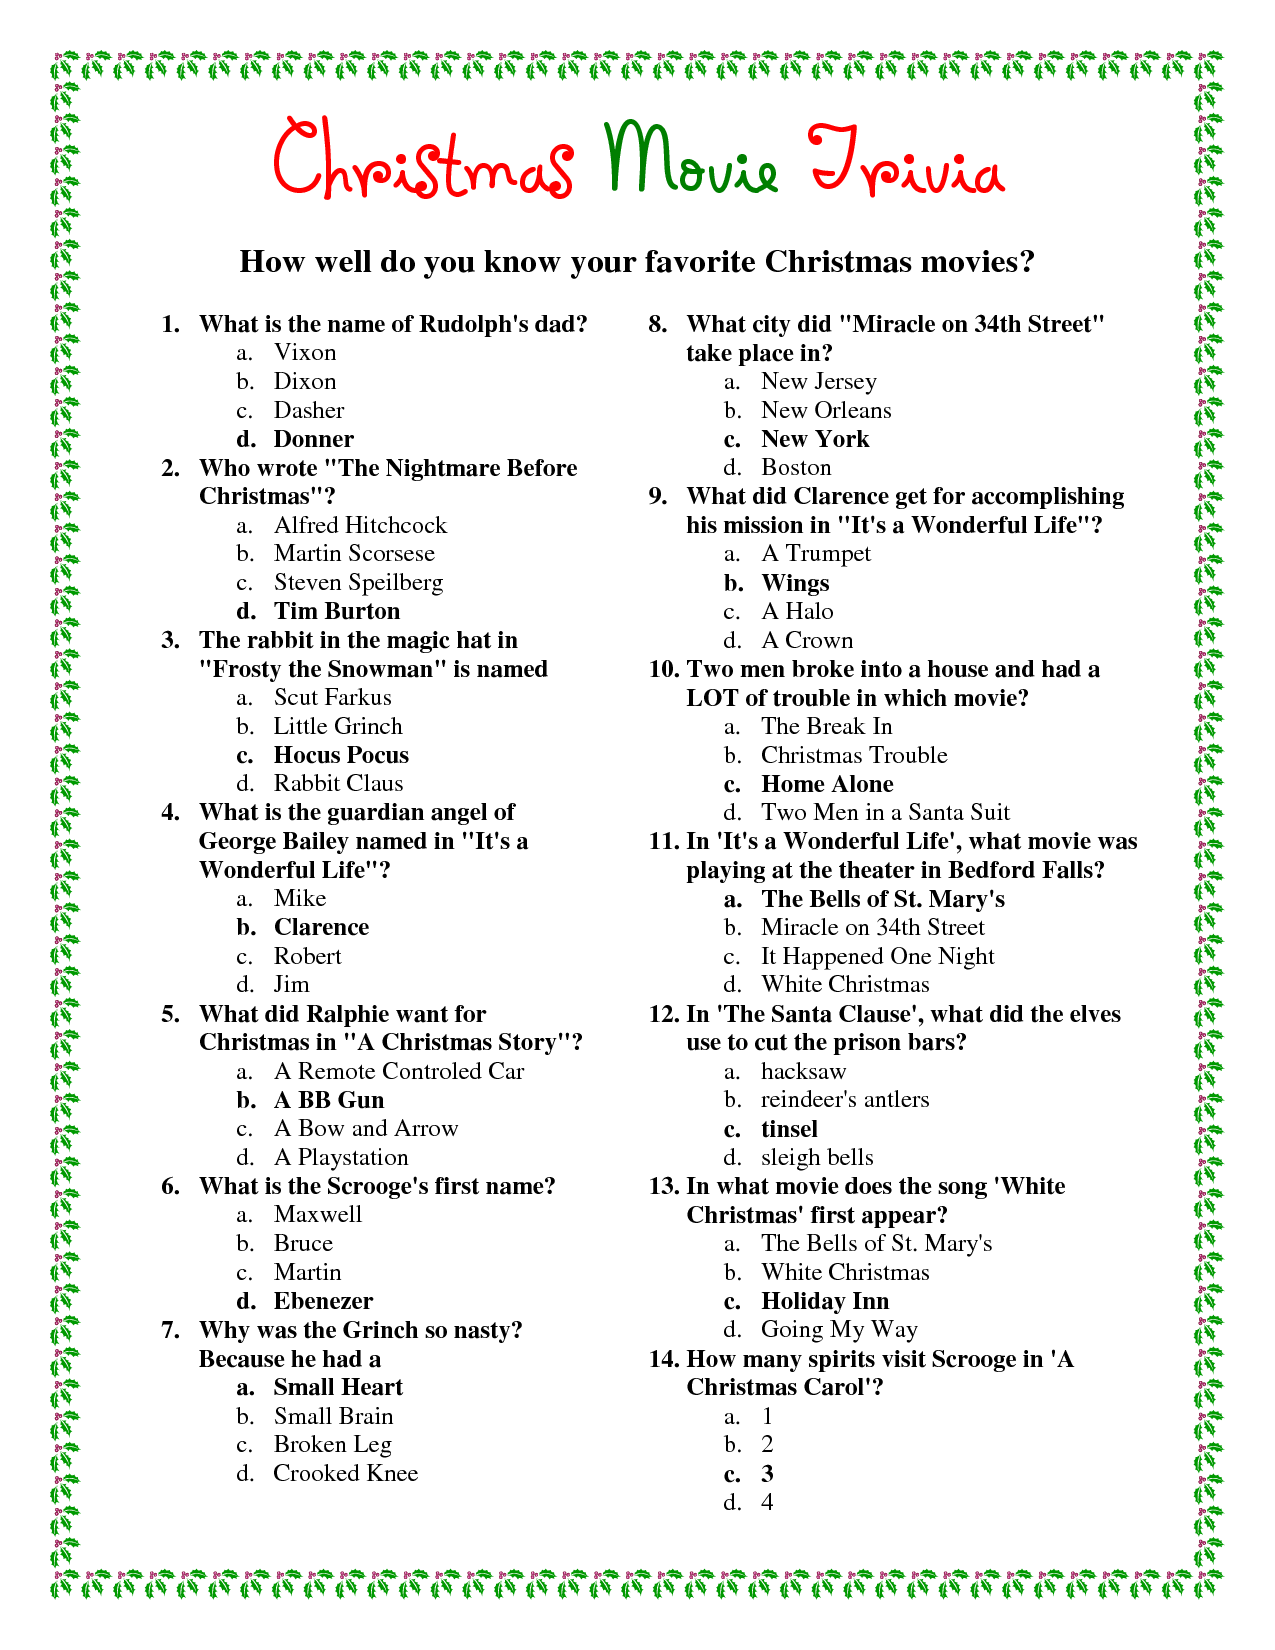 printable-christmas-trivia-questions-and-answers-kris-kringle-and-saint